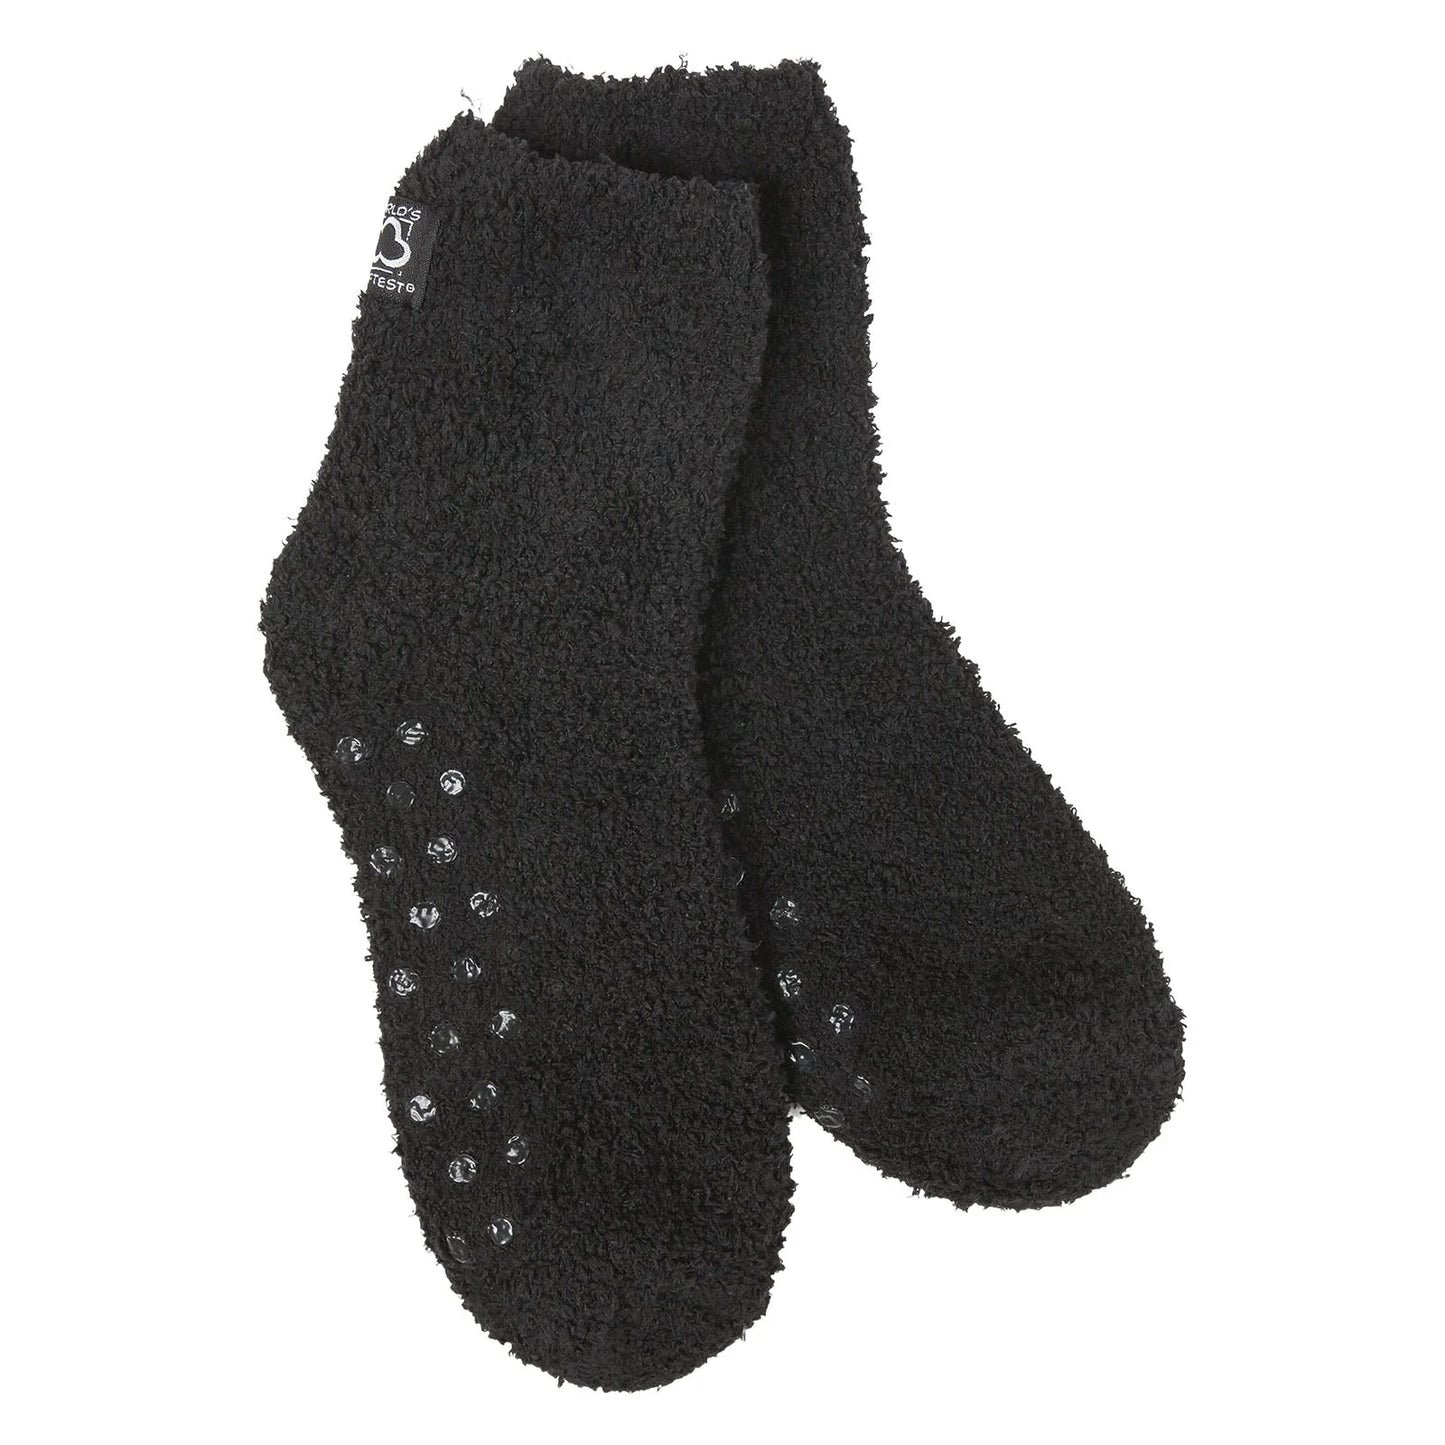 Black Cozy Quarter Socks w/ Grippers